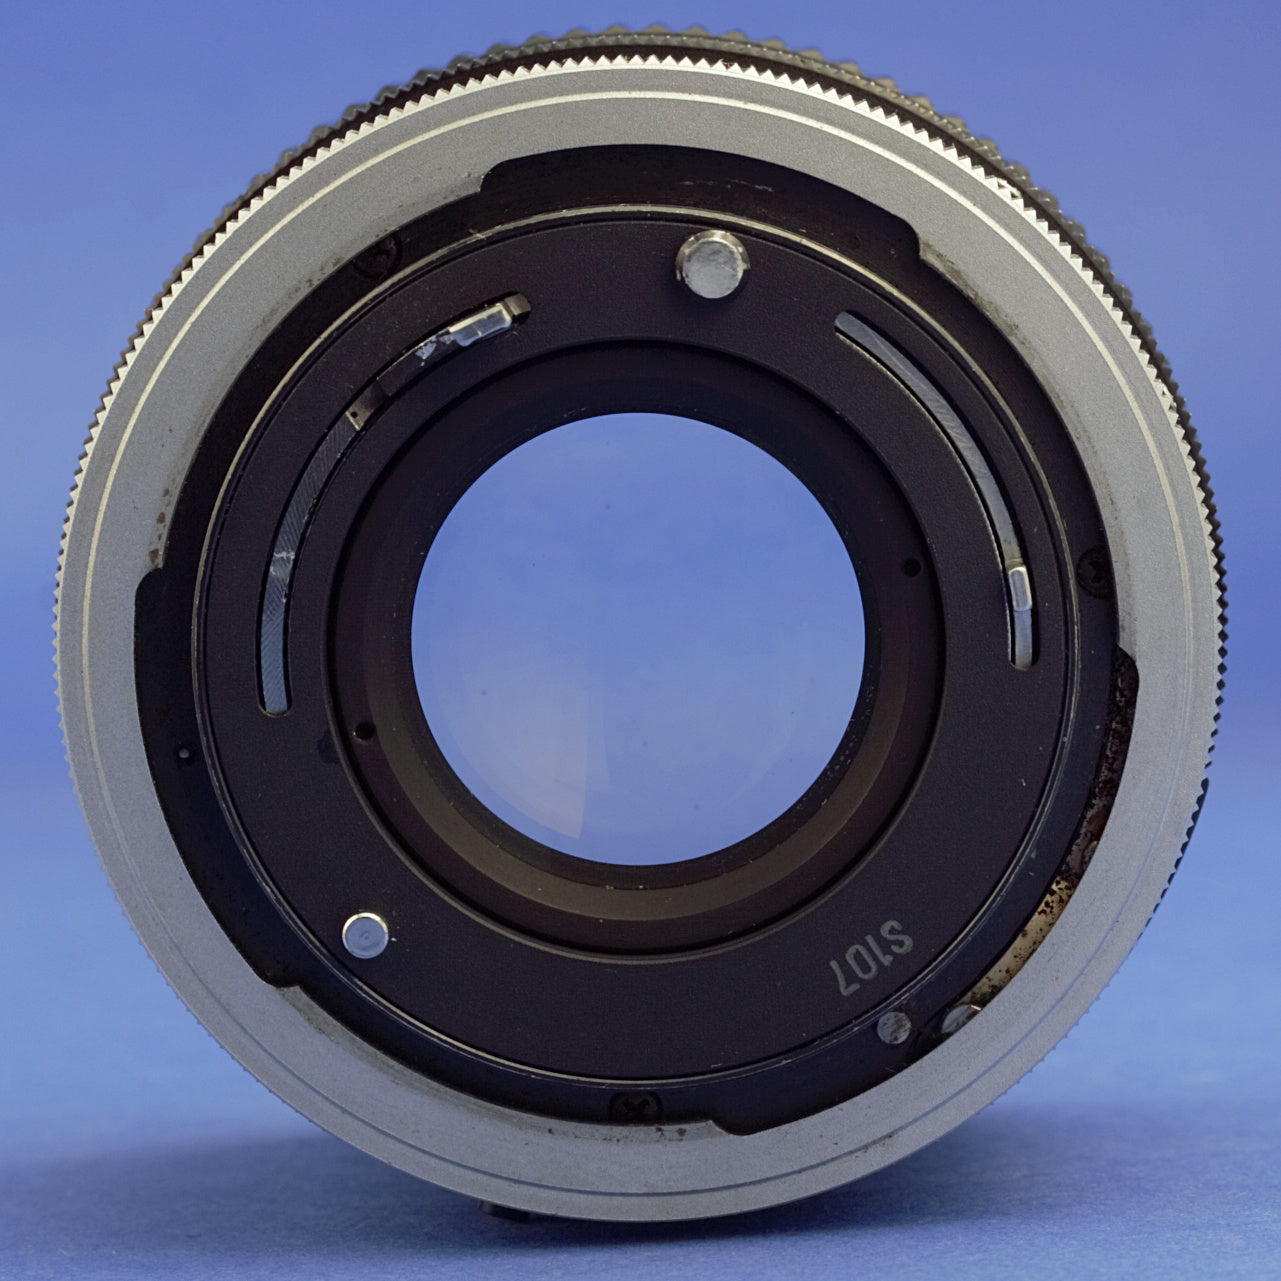 Canon FD 85mm 1.8 S.S.C. Lens